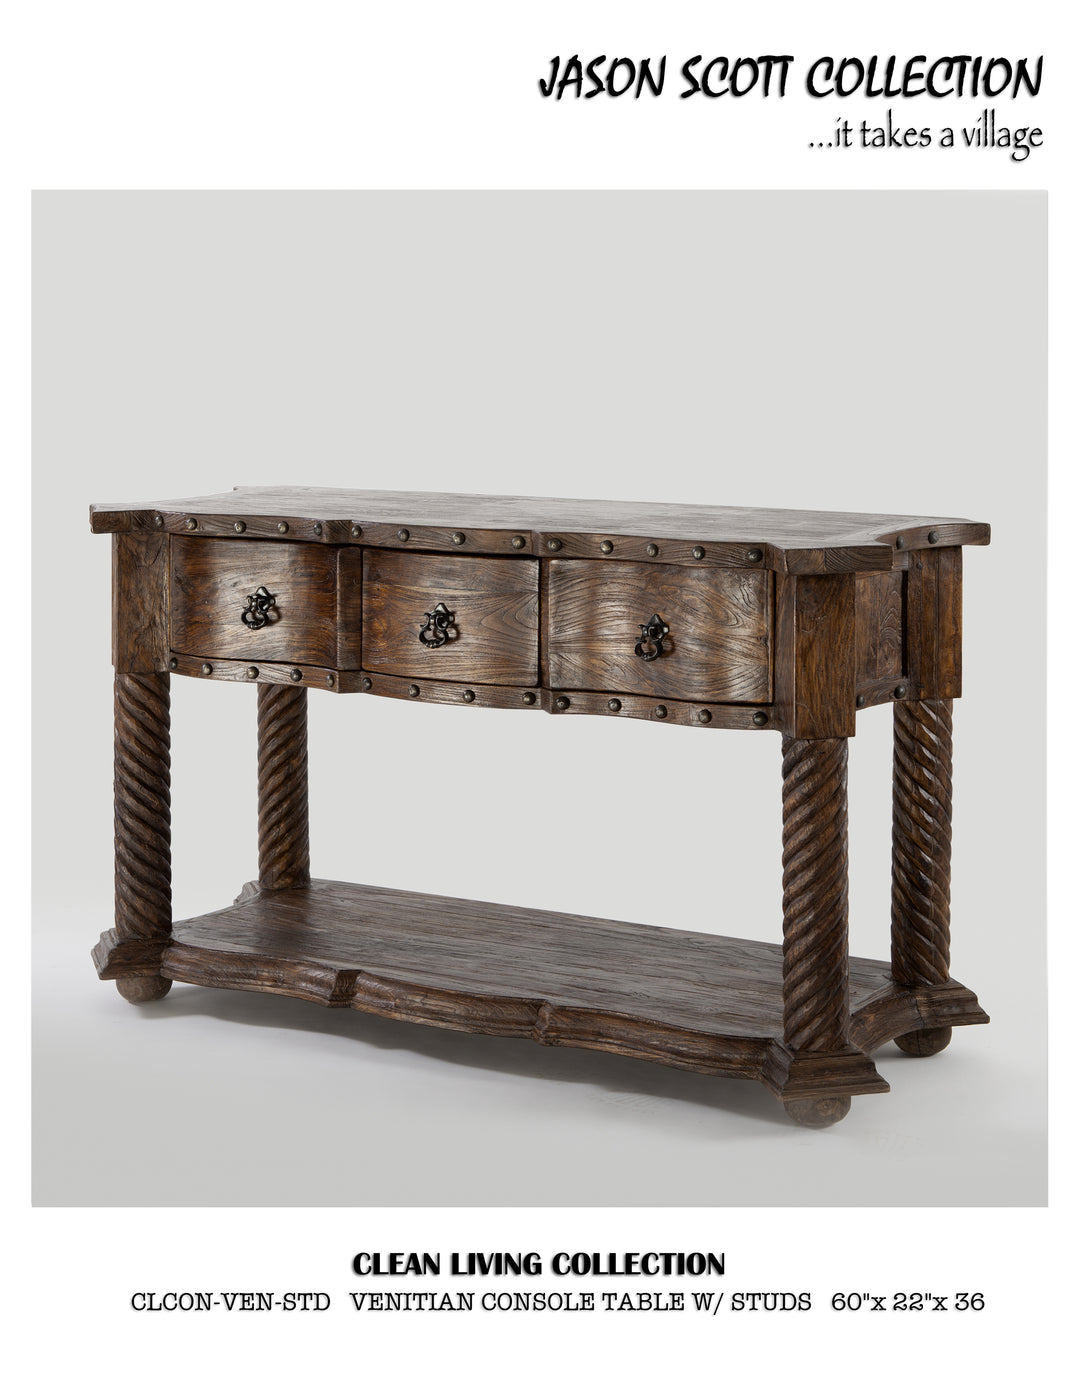 Venetian Console Table w/Studs